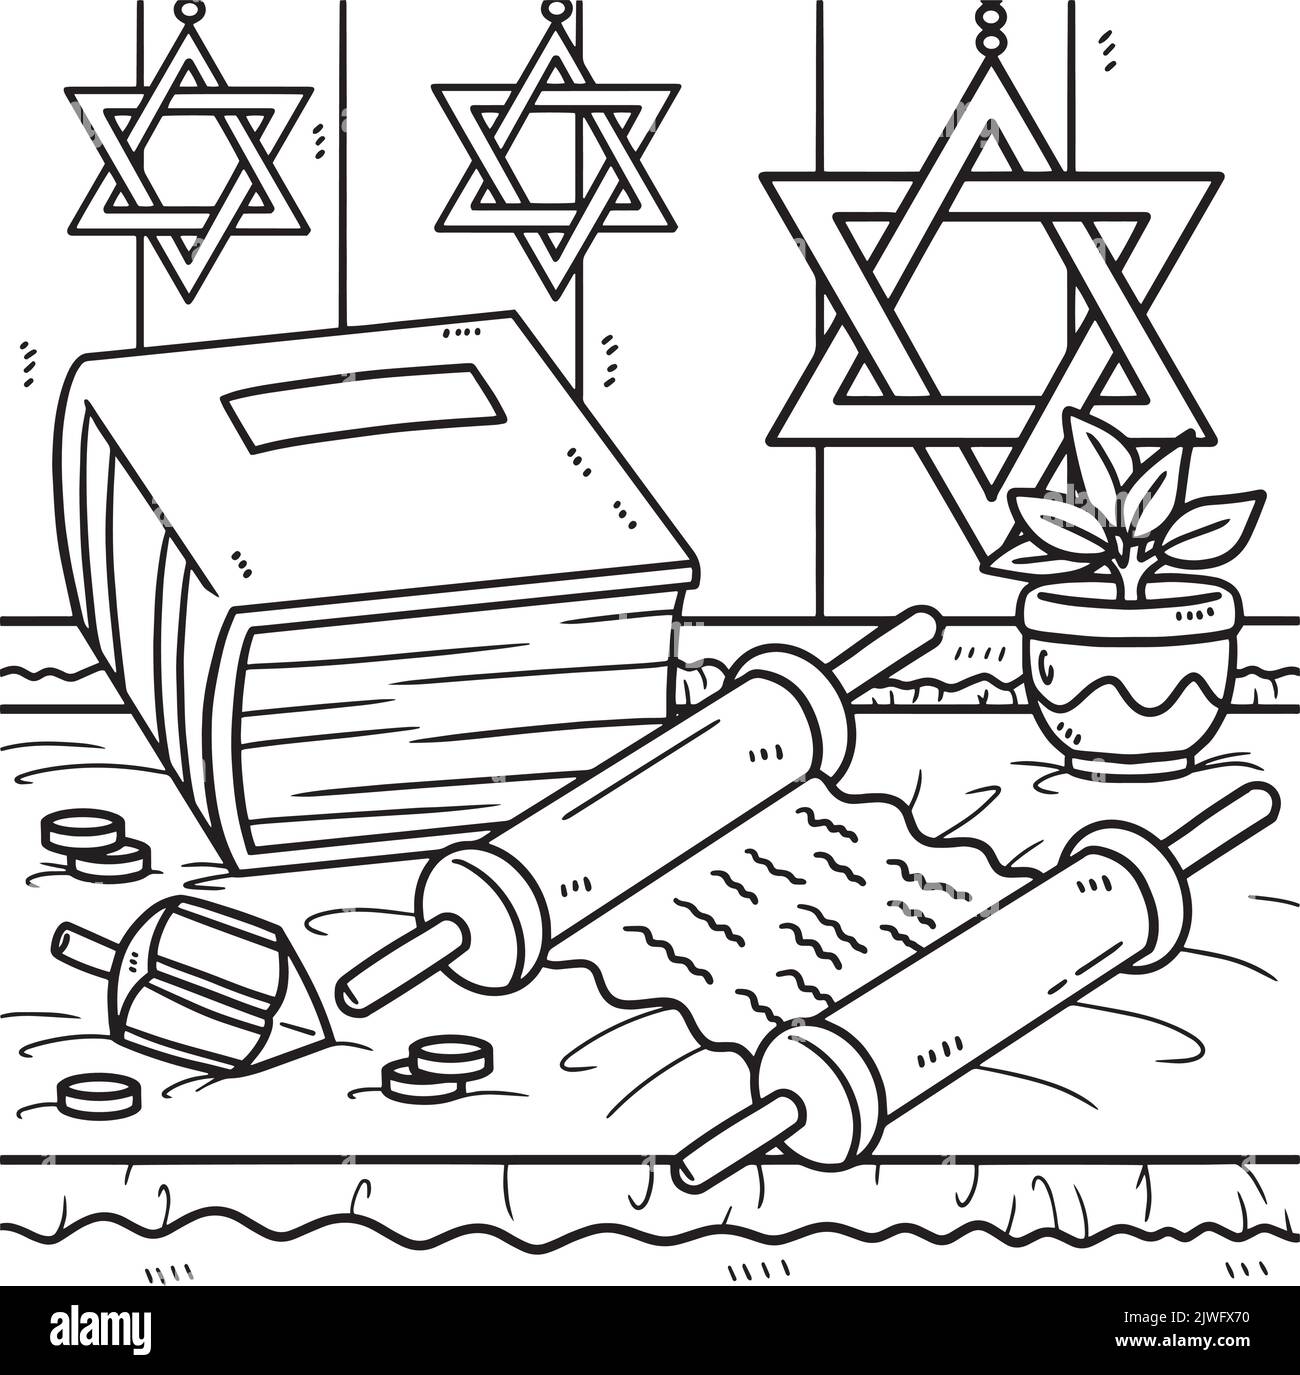 Hanukkah Torah Scroll and Book Coloring Page  Stock Vector